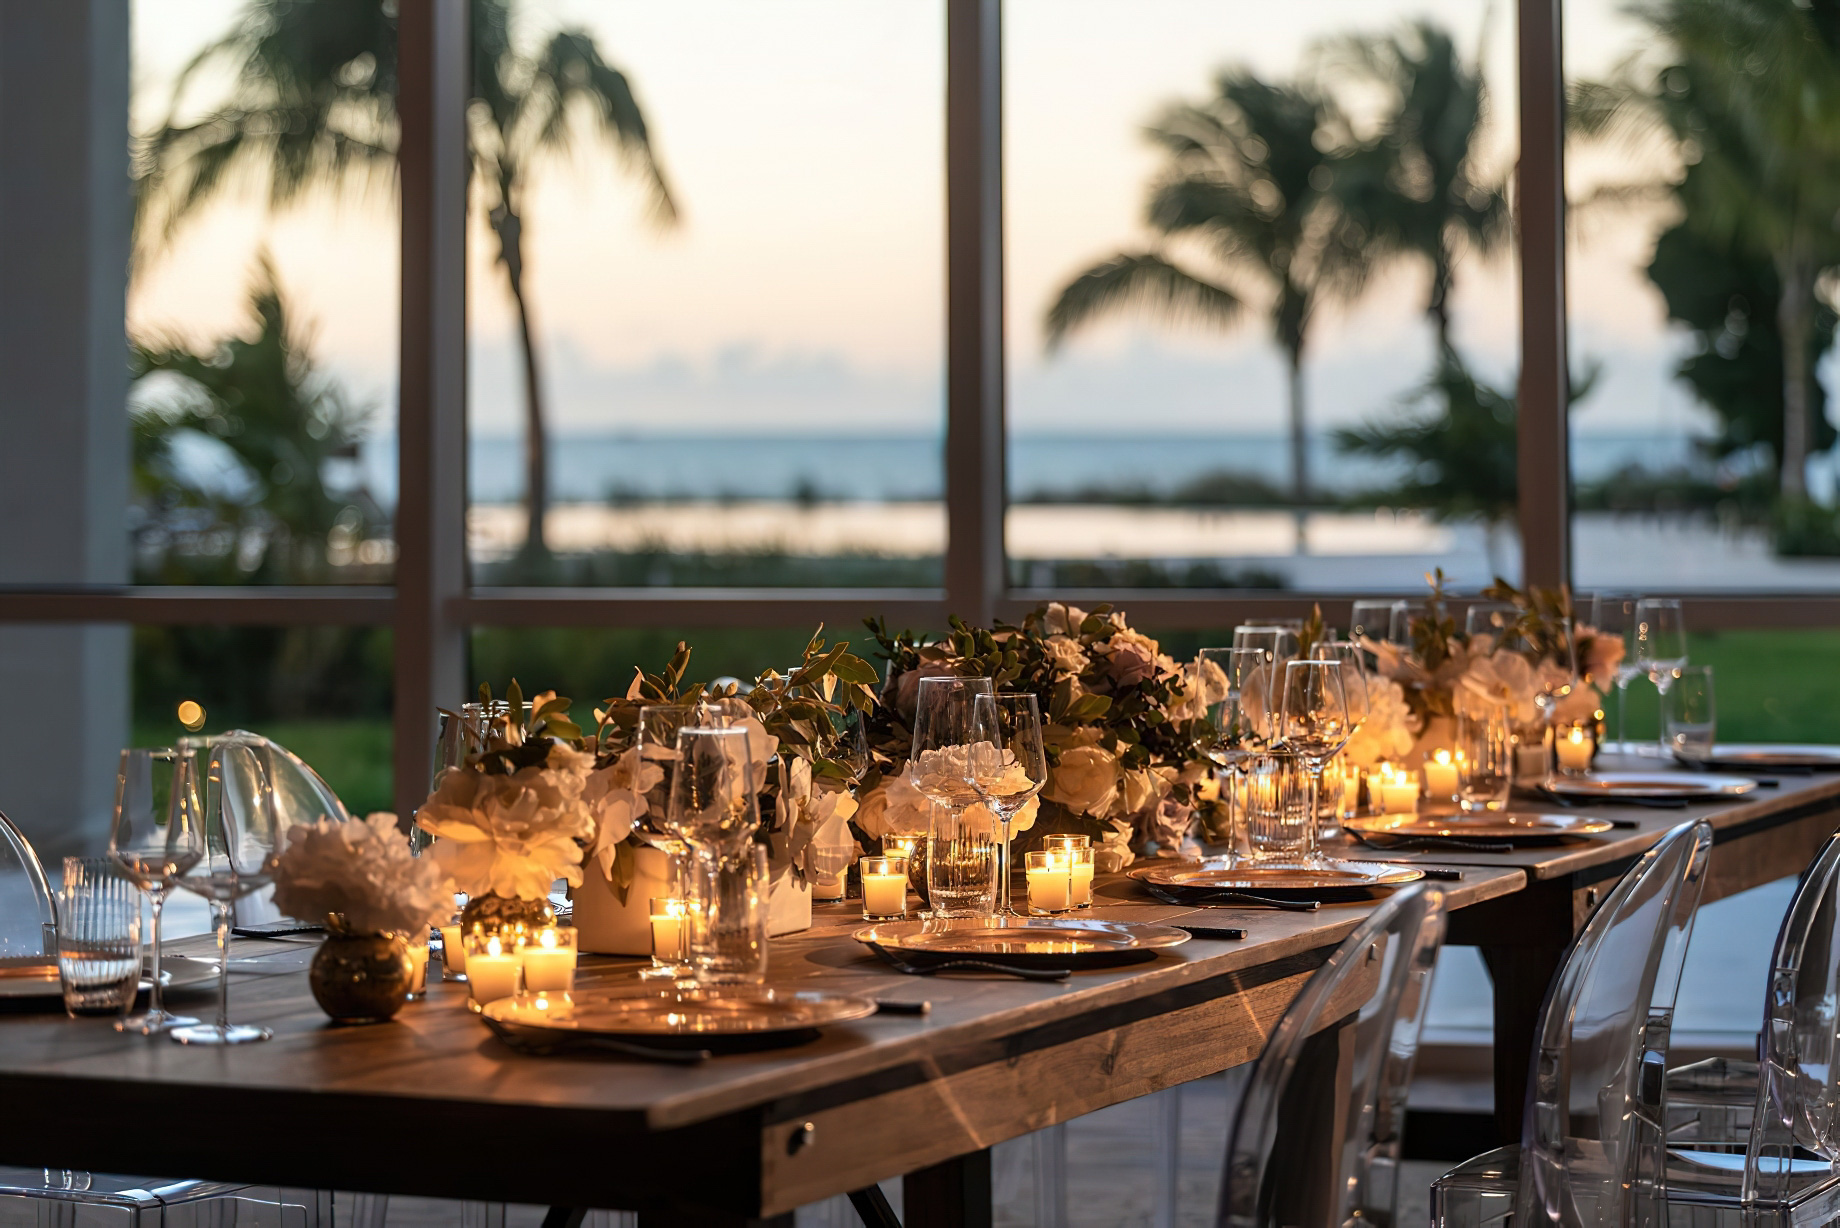 The Ritz-Carlton, Turks & Caicos Resort – Providenciales, Turks and Caicos Islands – Ballroom Table